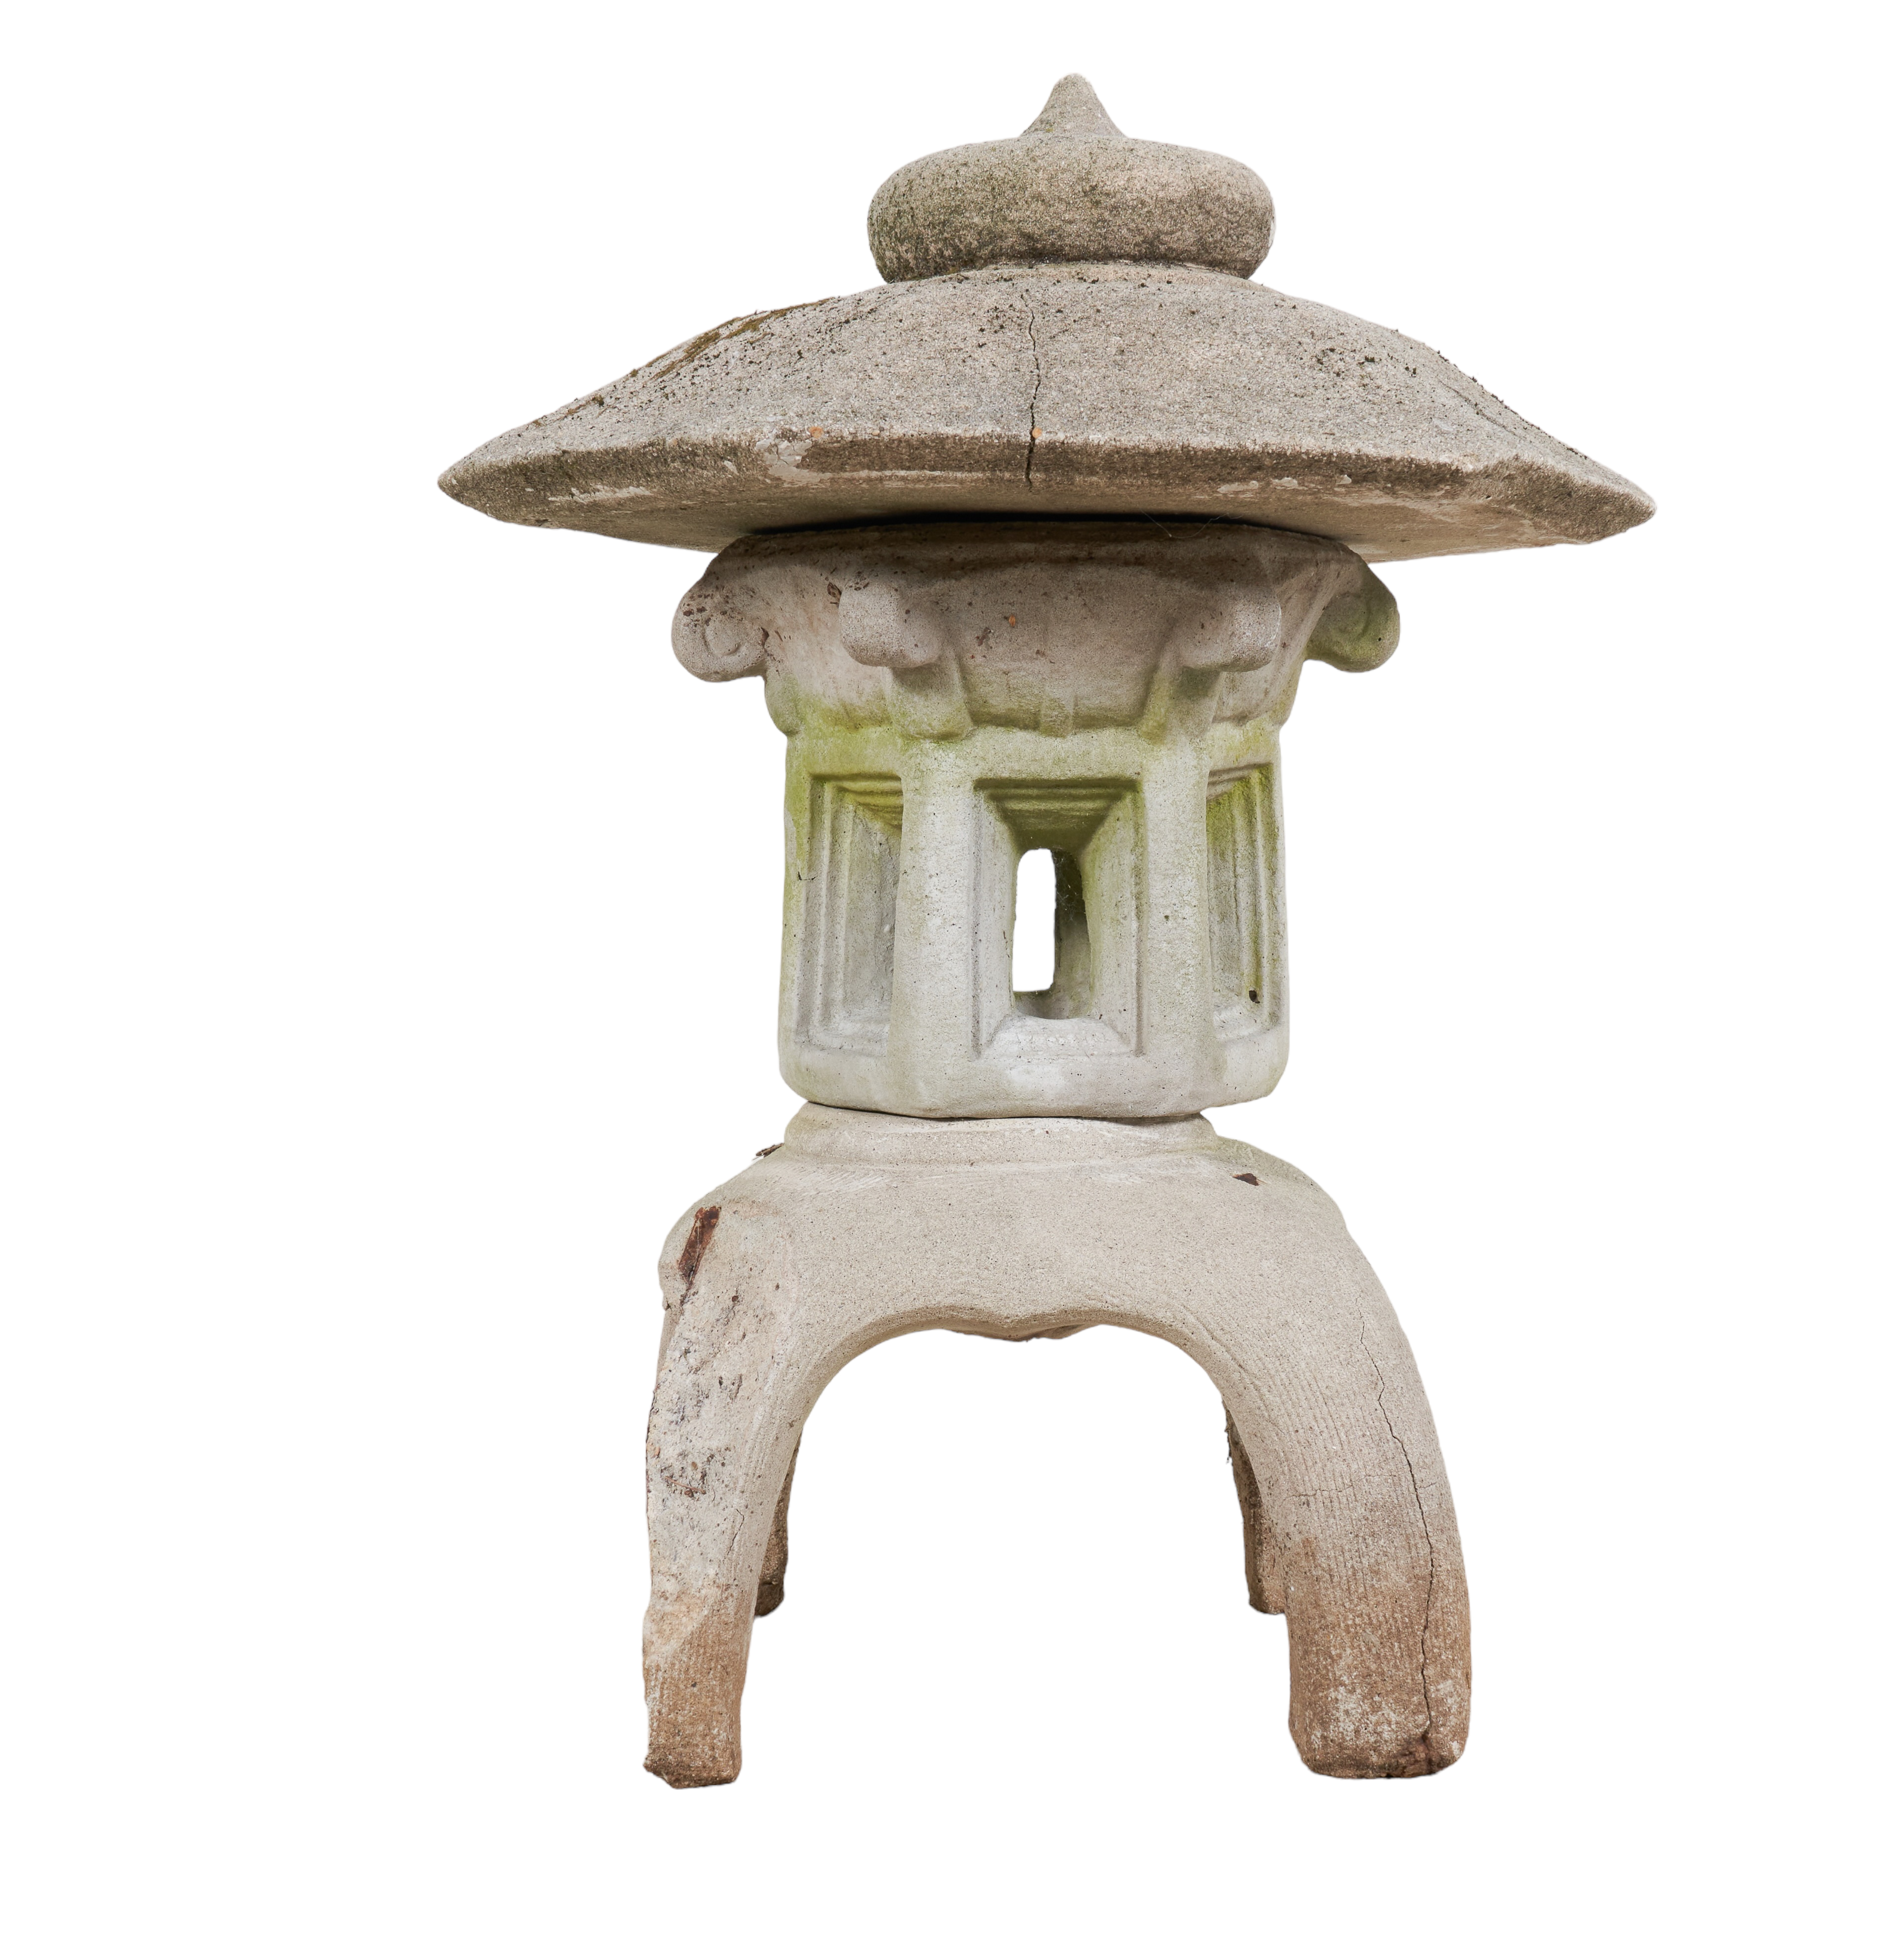 Cement tiered pagoda form garden statue,